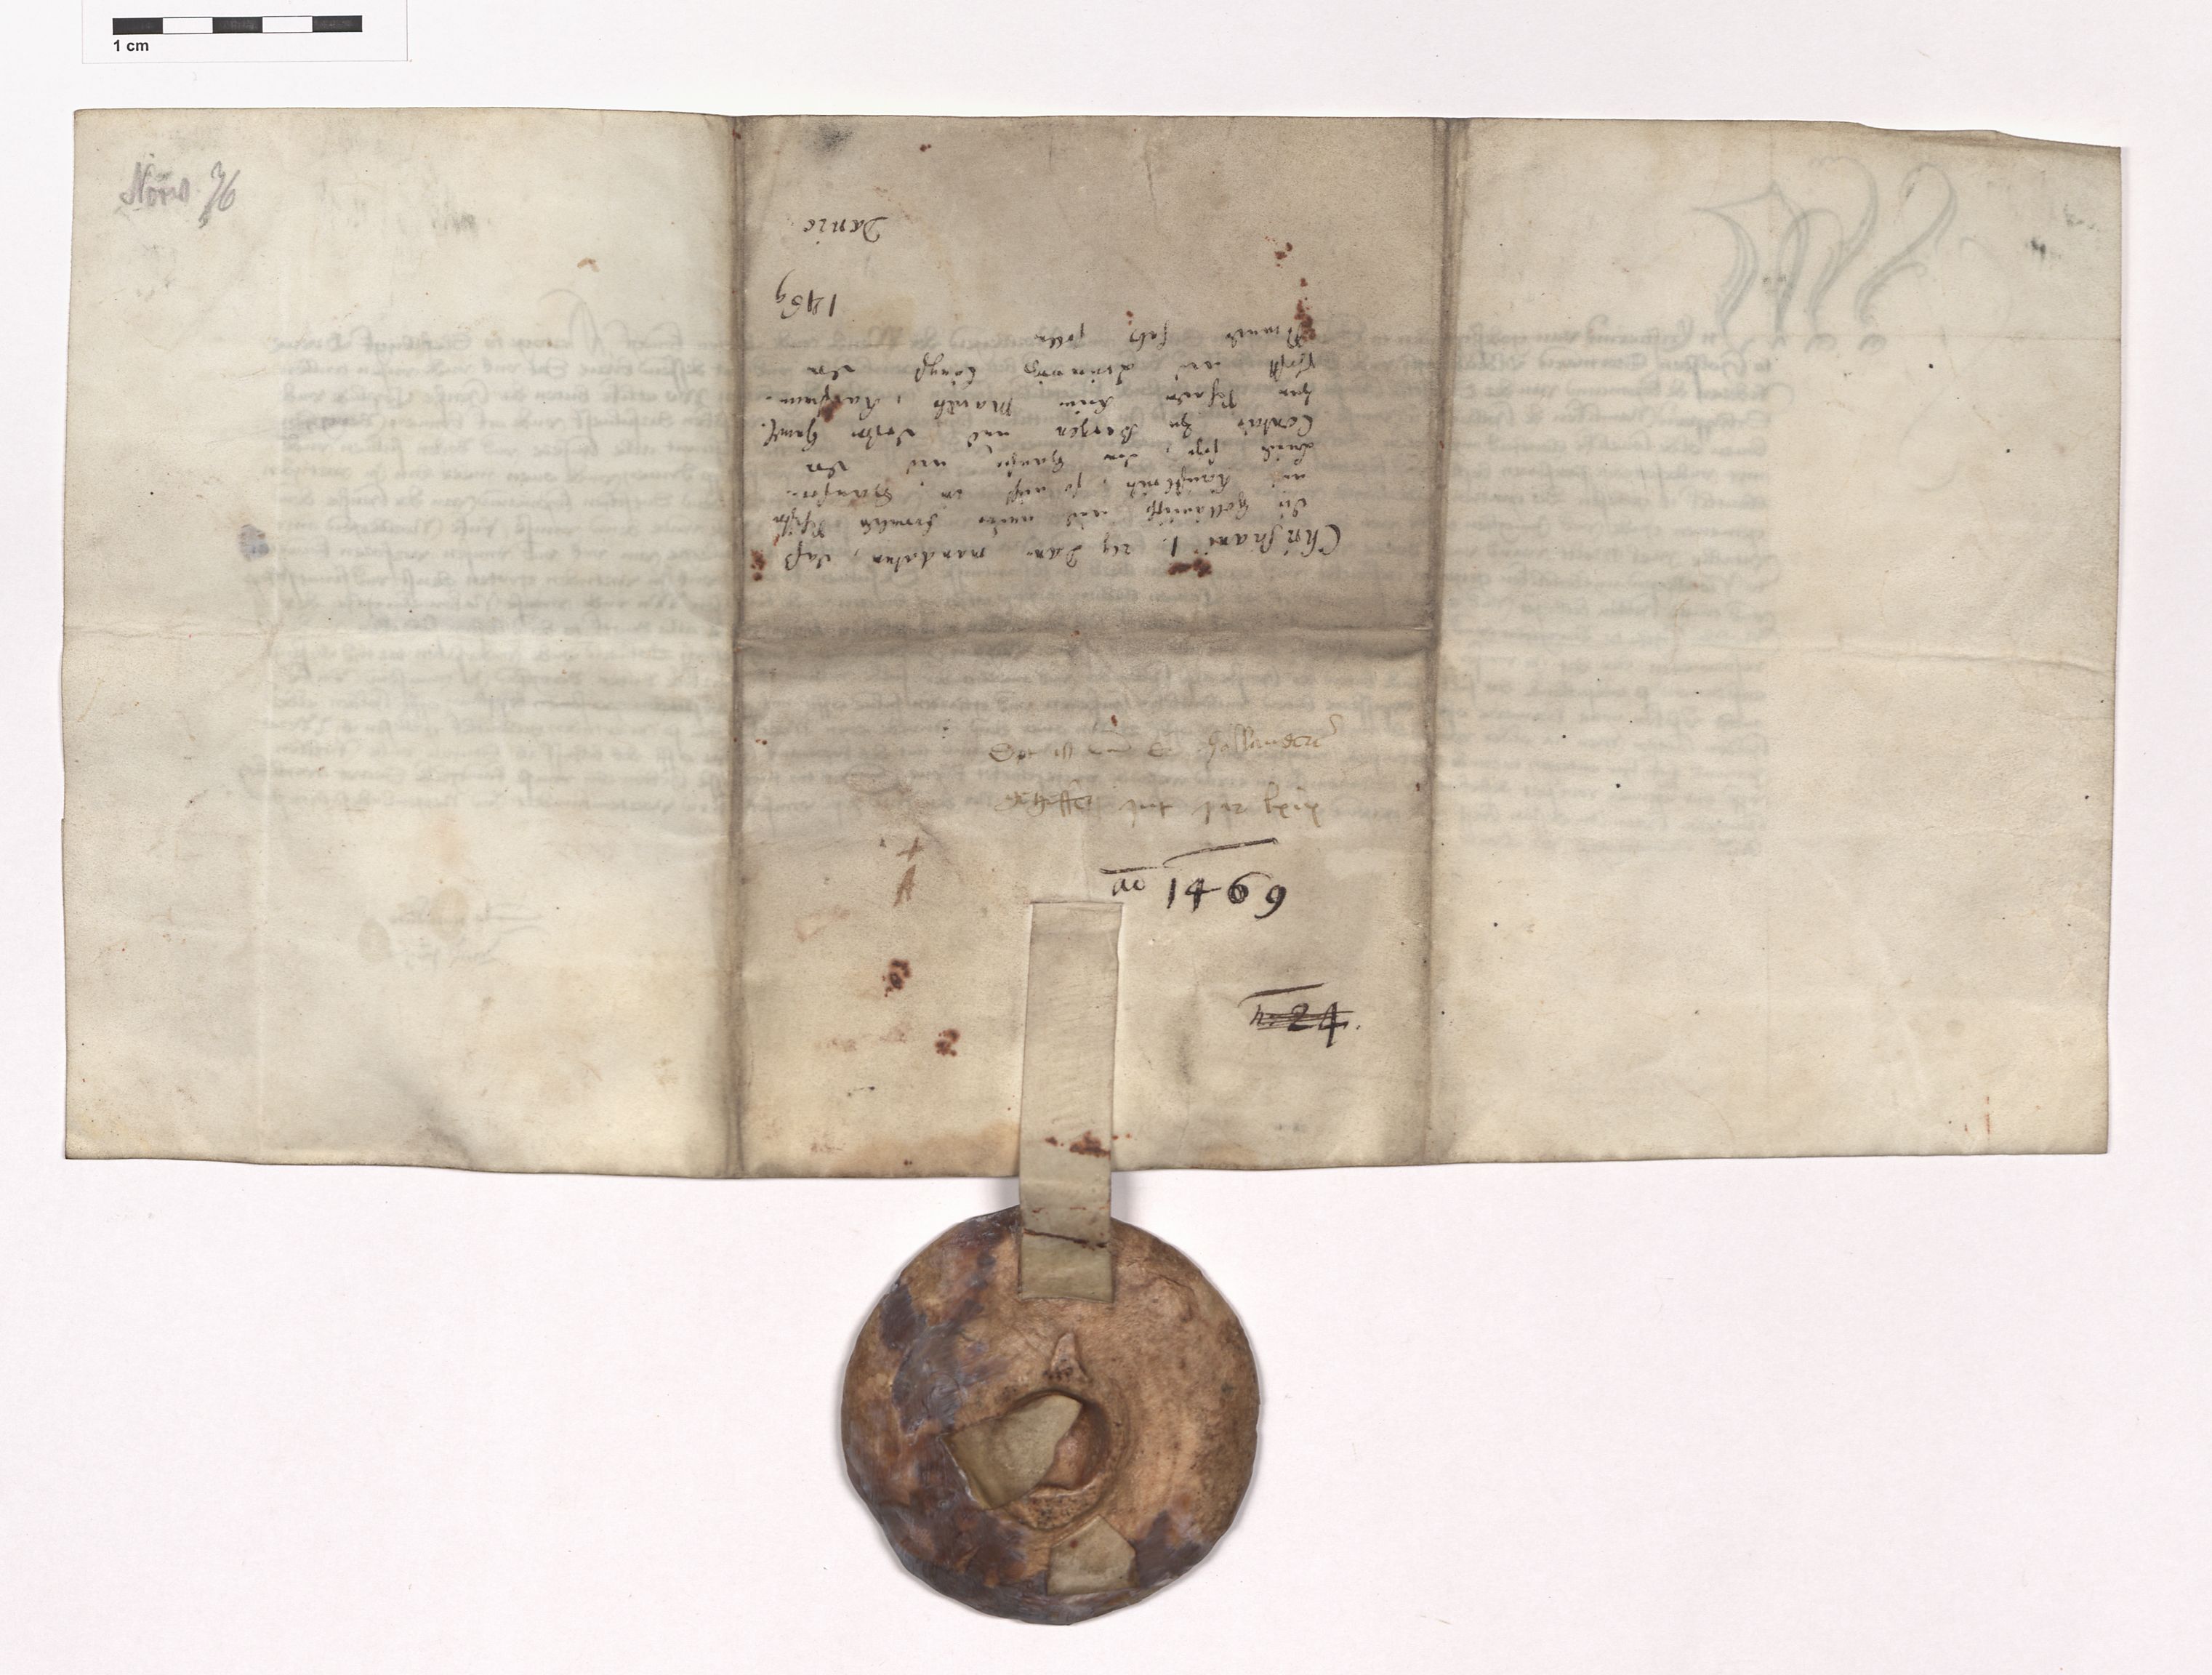 07.1 Urkunden, 3 Auswärtige Beziehungen (Externa), AHL/-/21: Norwegen (Norvagica); Kontor zu Bergen, 1247-1747, p. 766